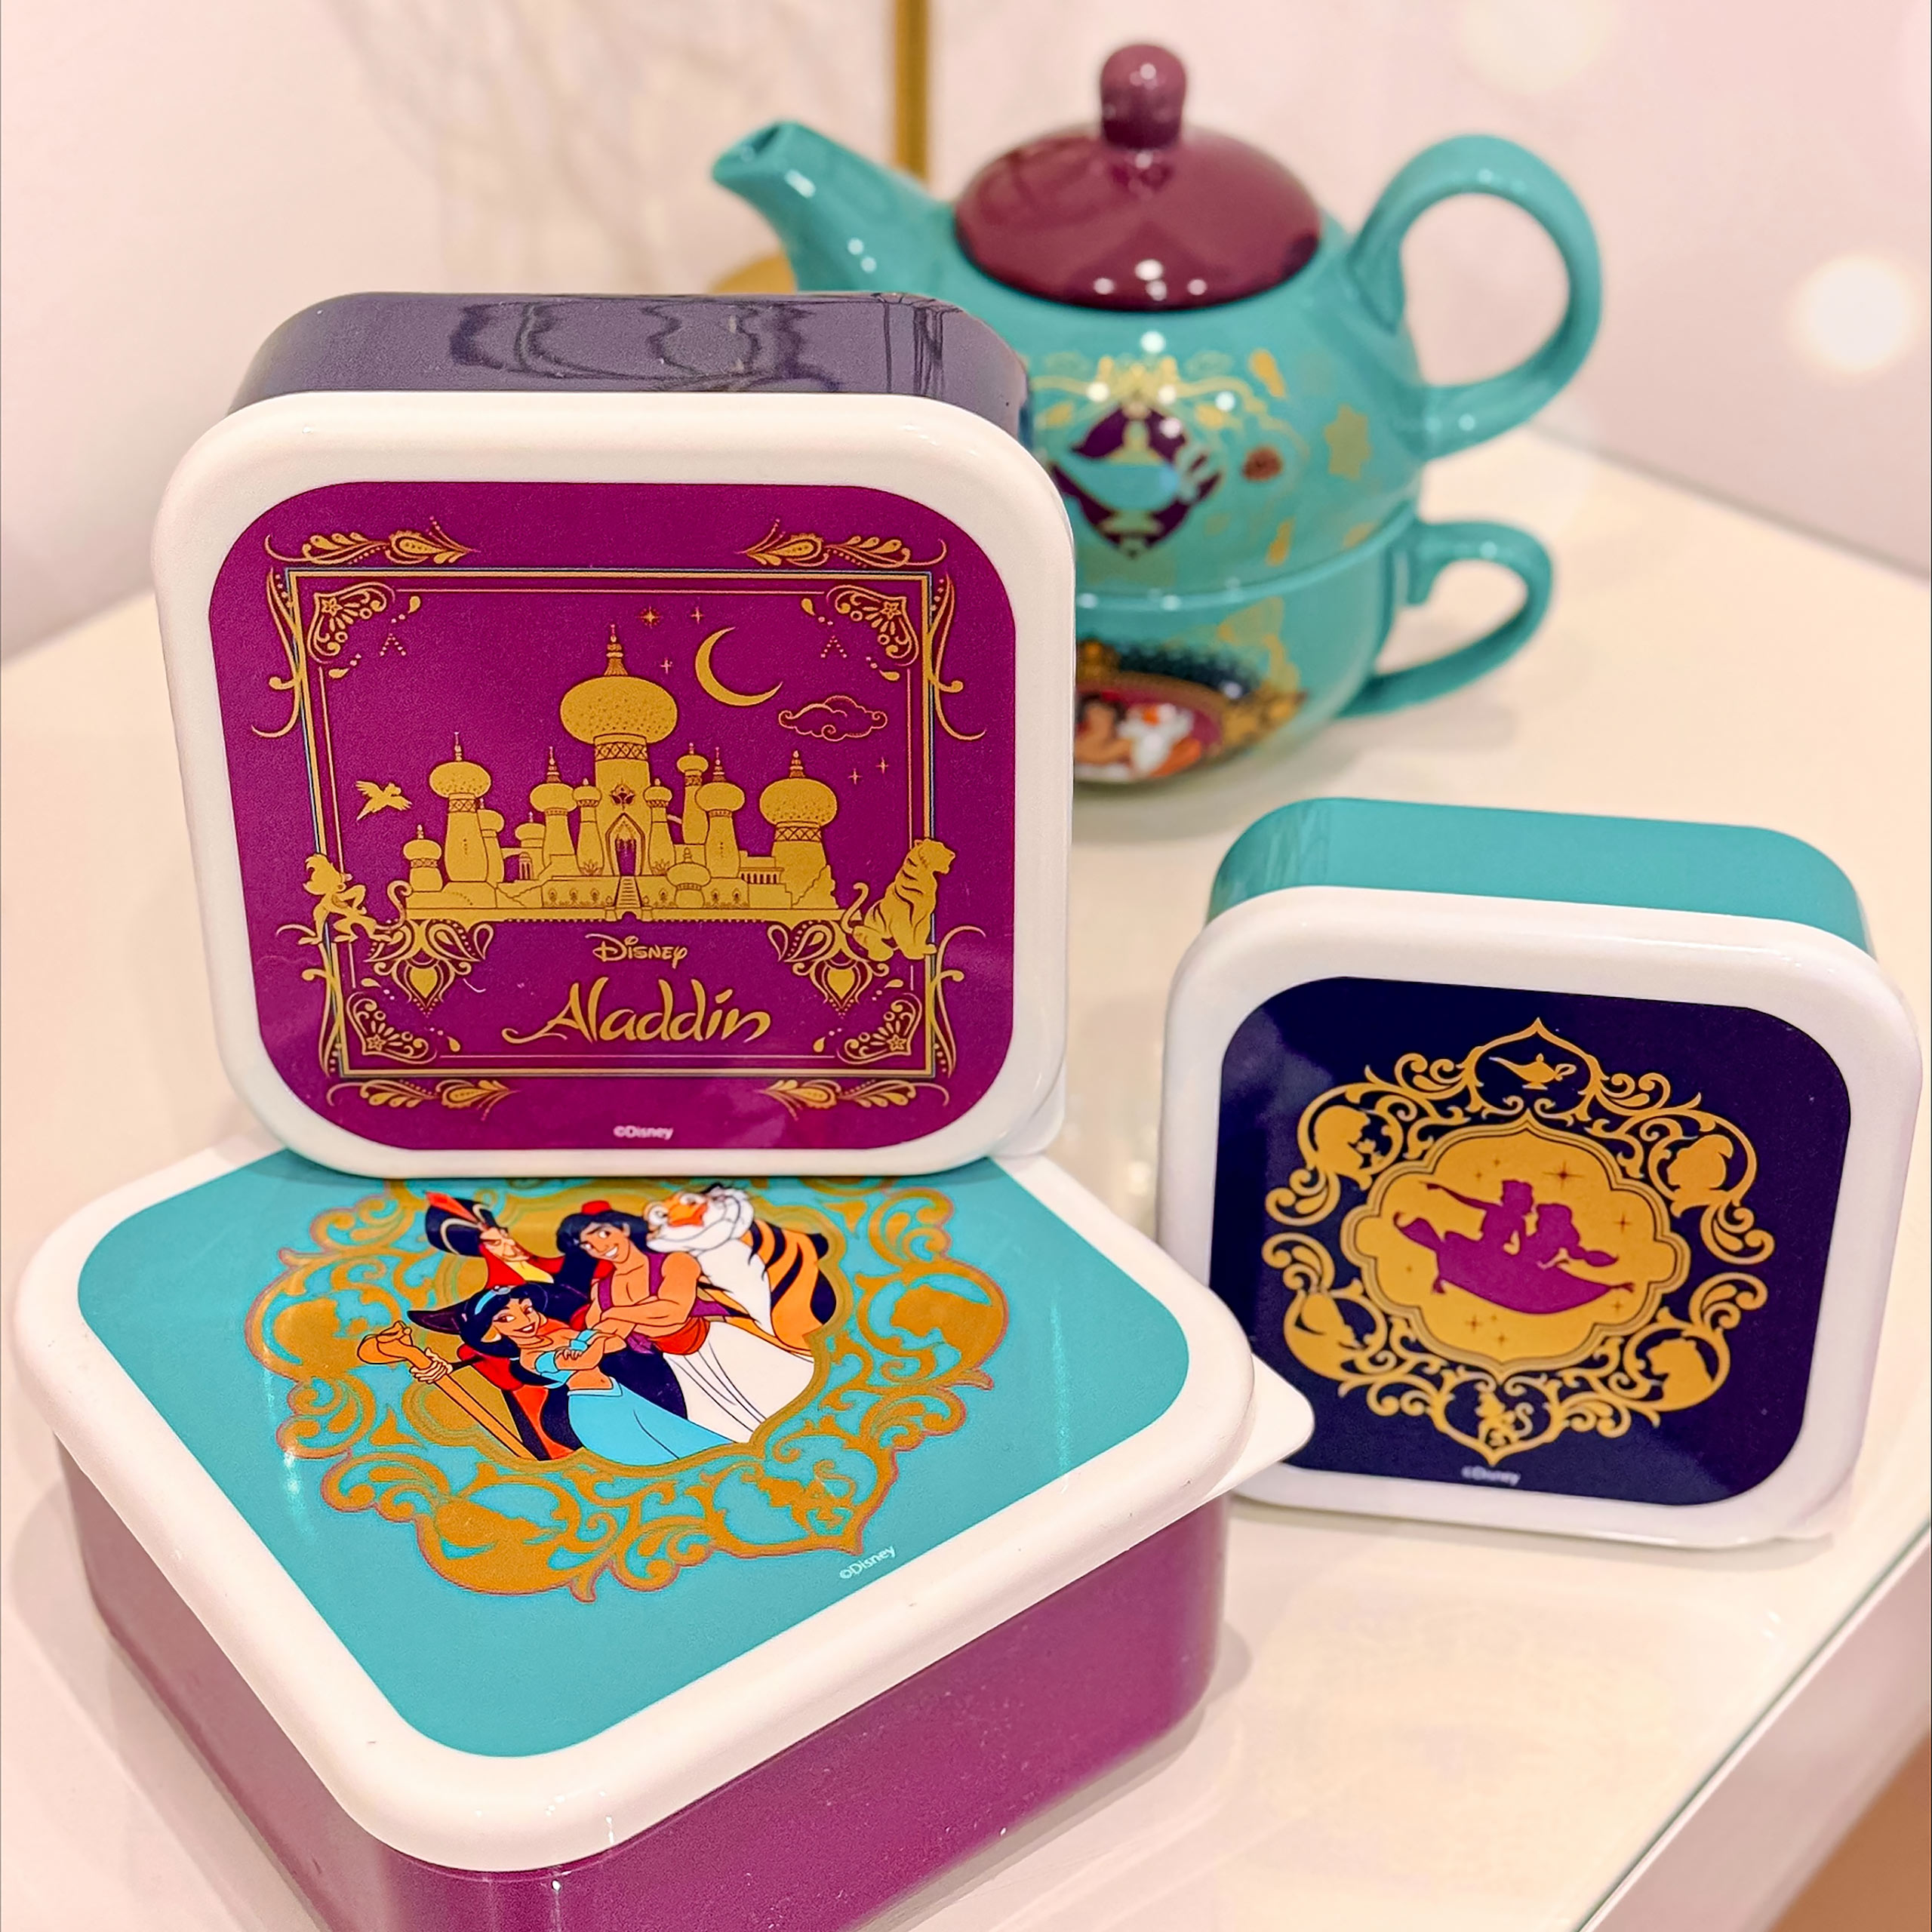 Aladdin - Jasmine et Aladdin Lunchbox Ensemble de 3